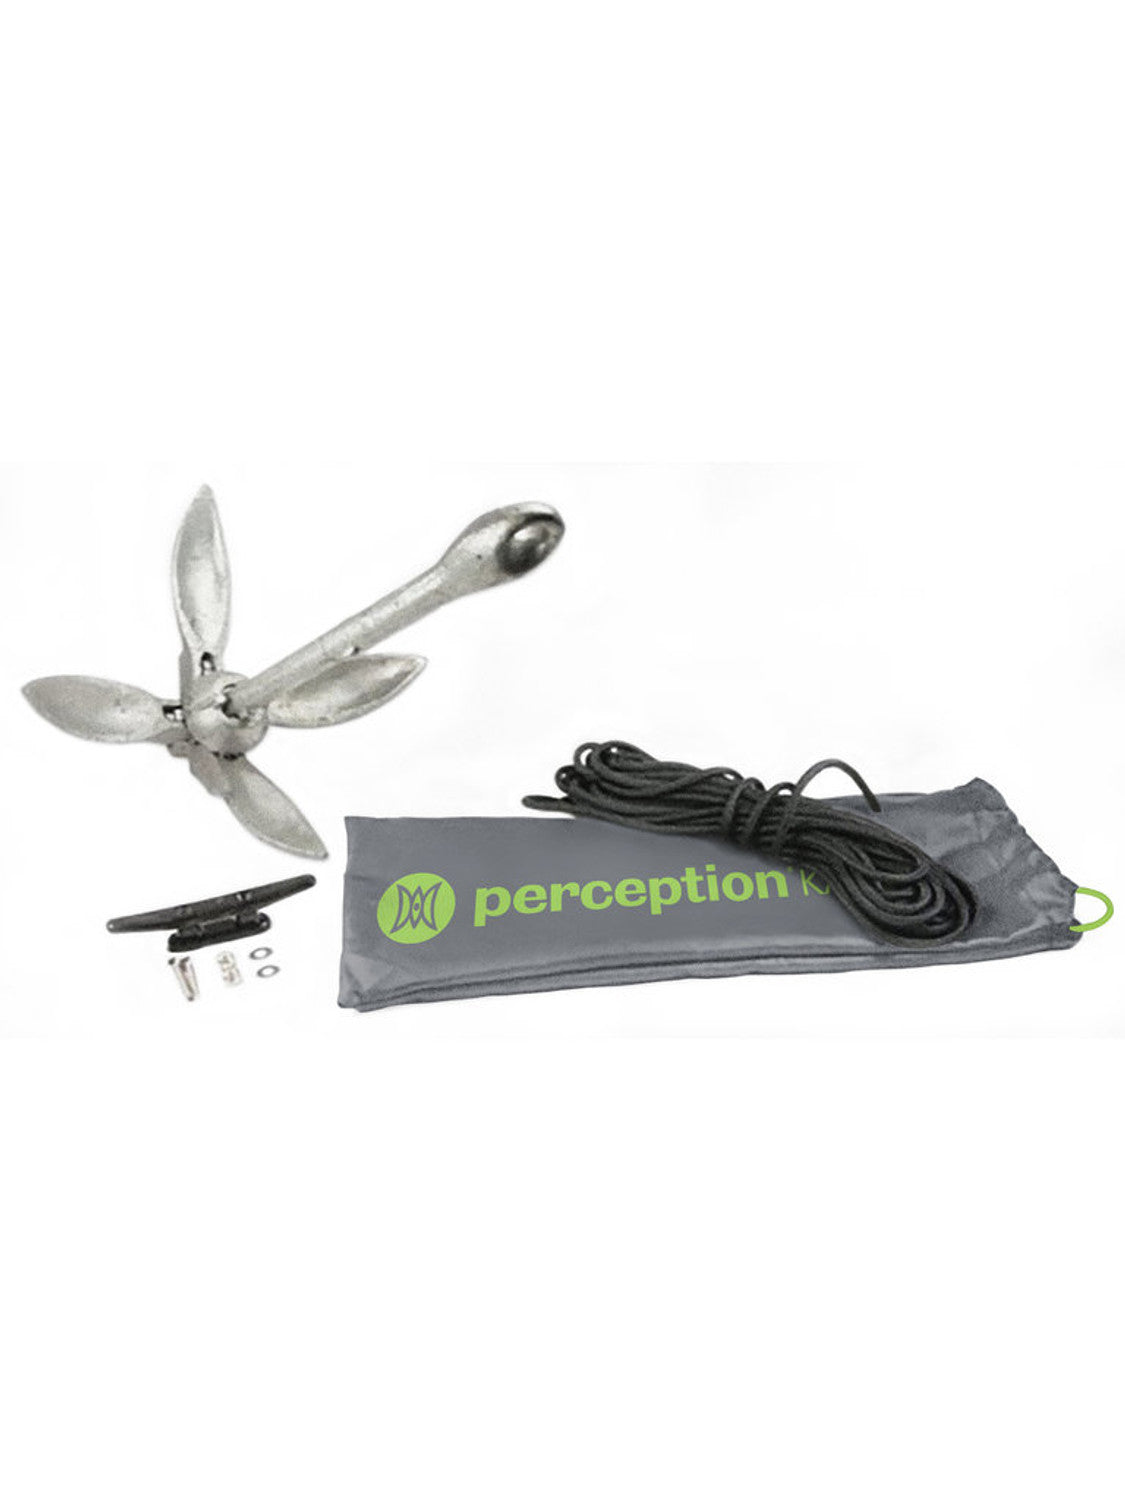 Perception 3.5lb Anchor